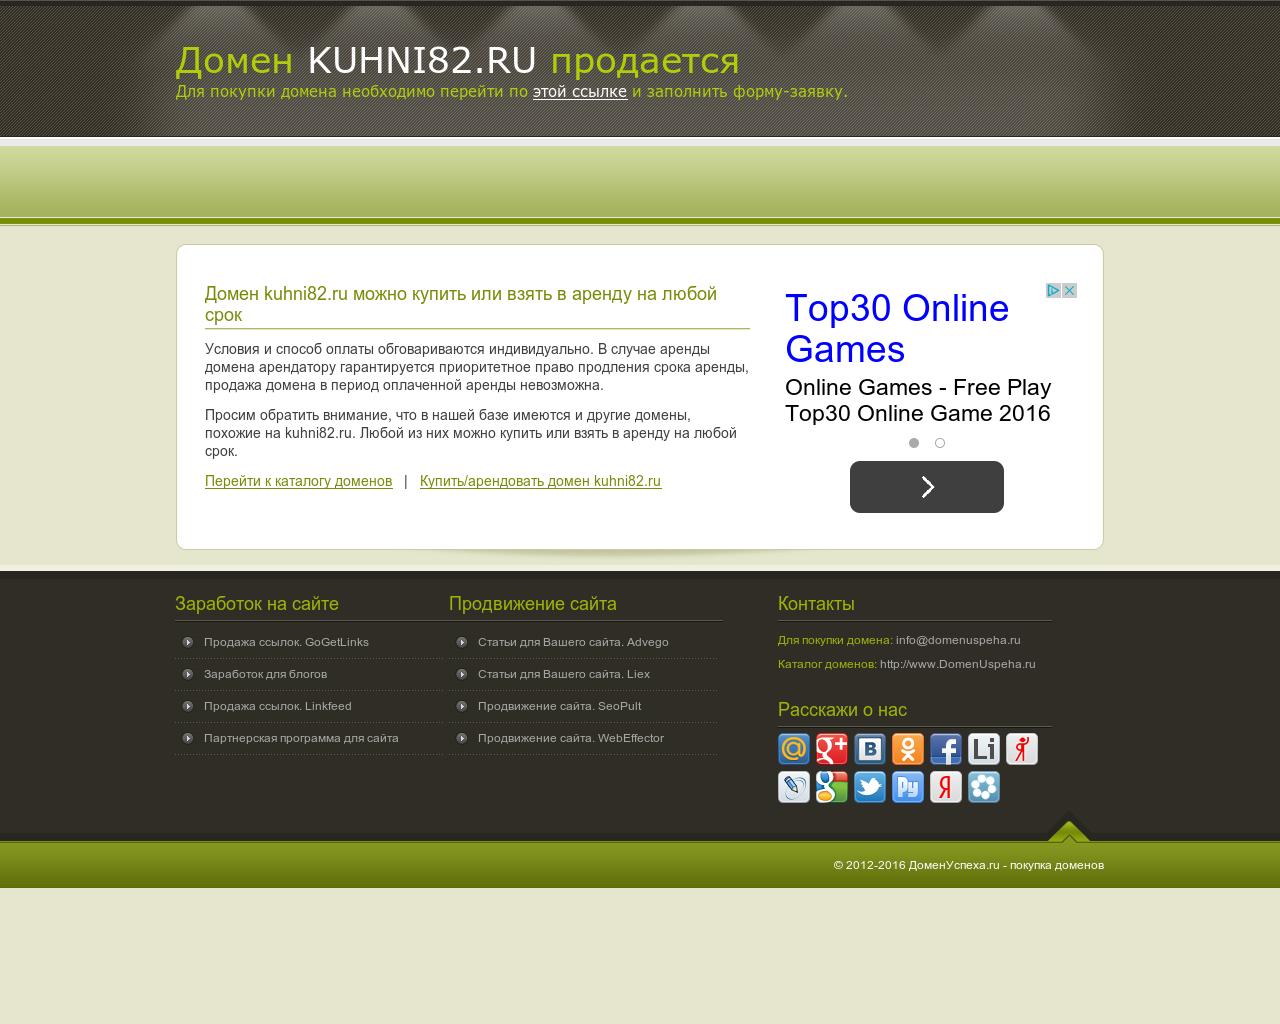 Изображение сайта kuhni82.ru в разрешении 1280x1024